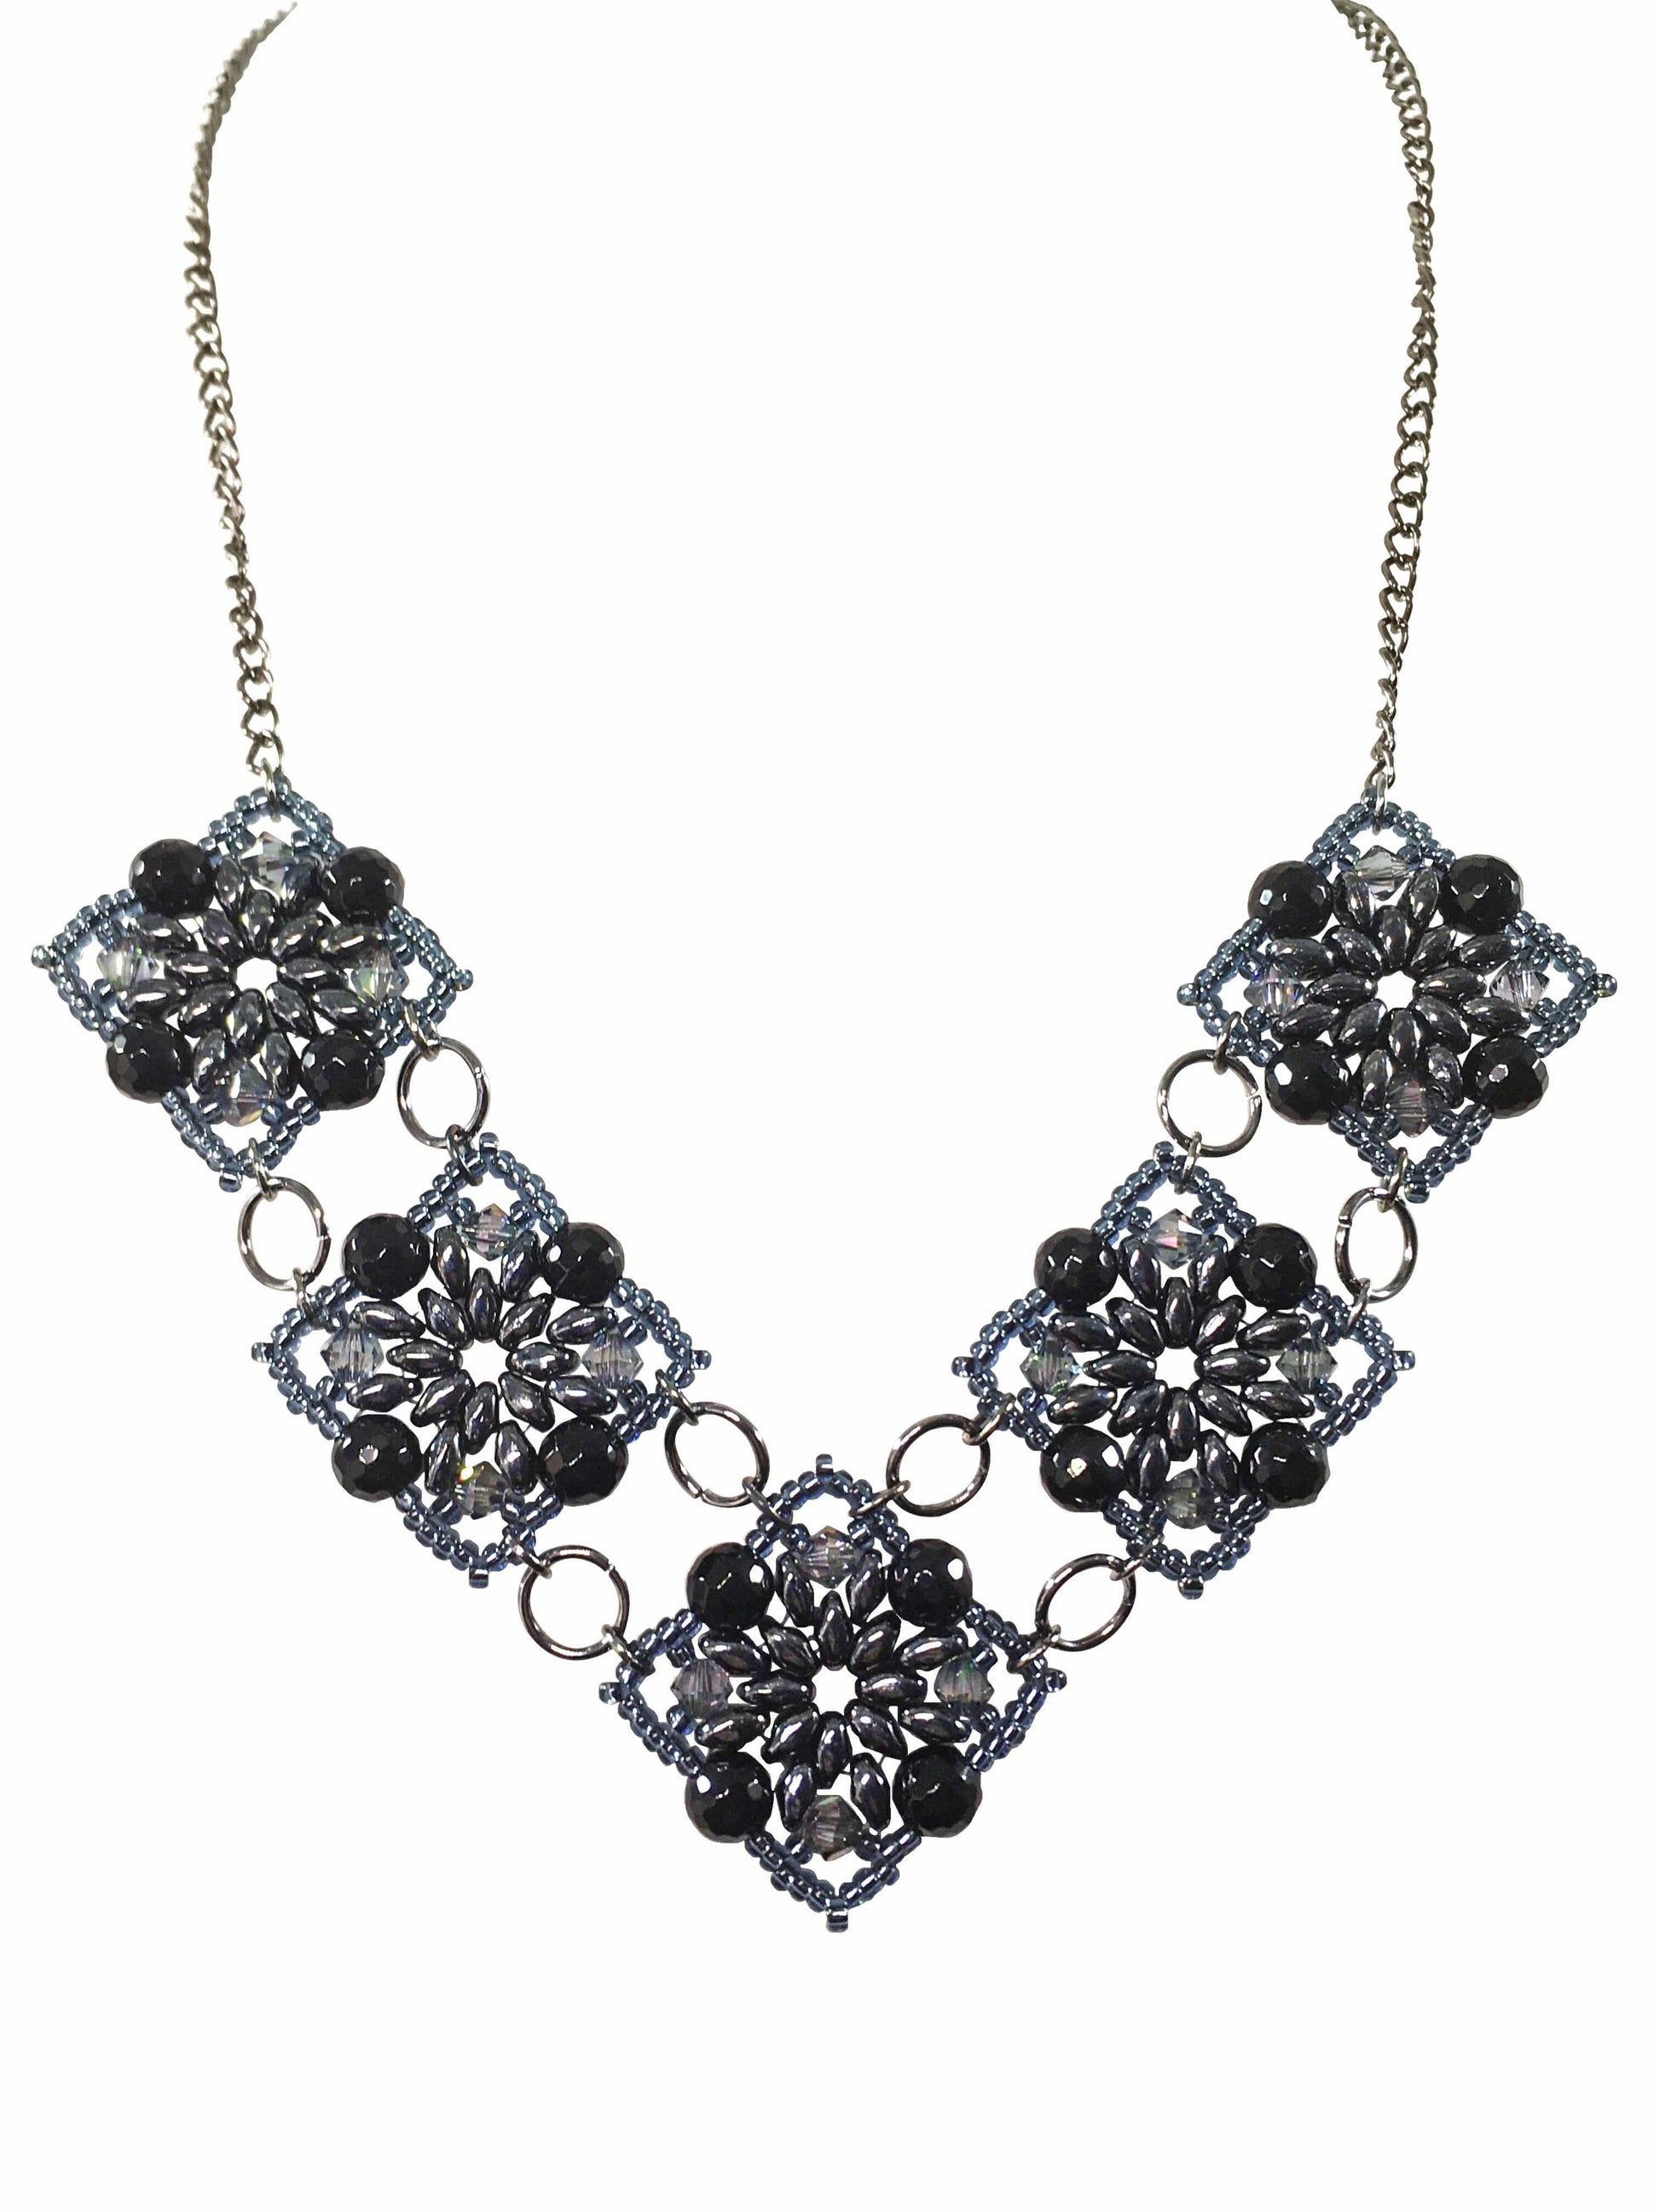 Handmade Black Agate Gemstone Beaded Necklace